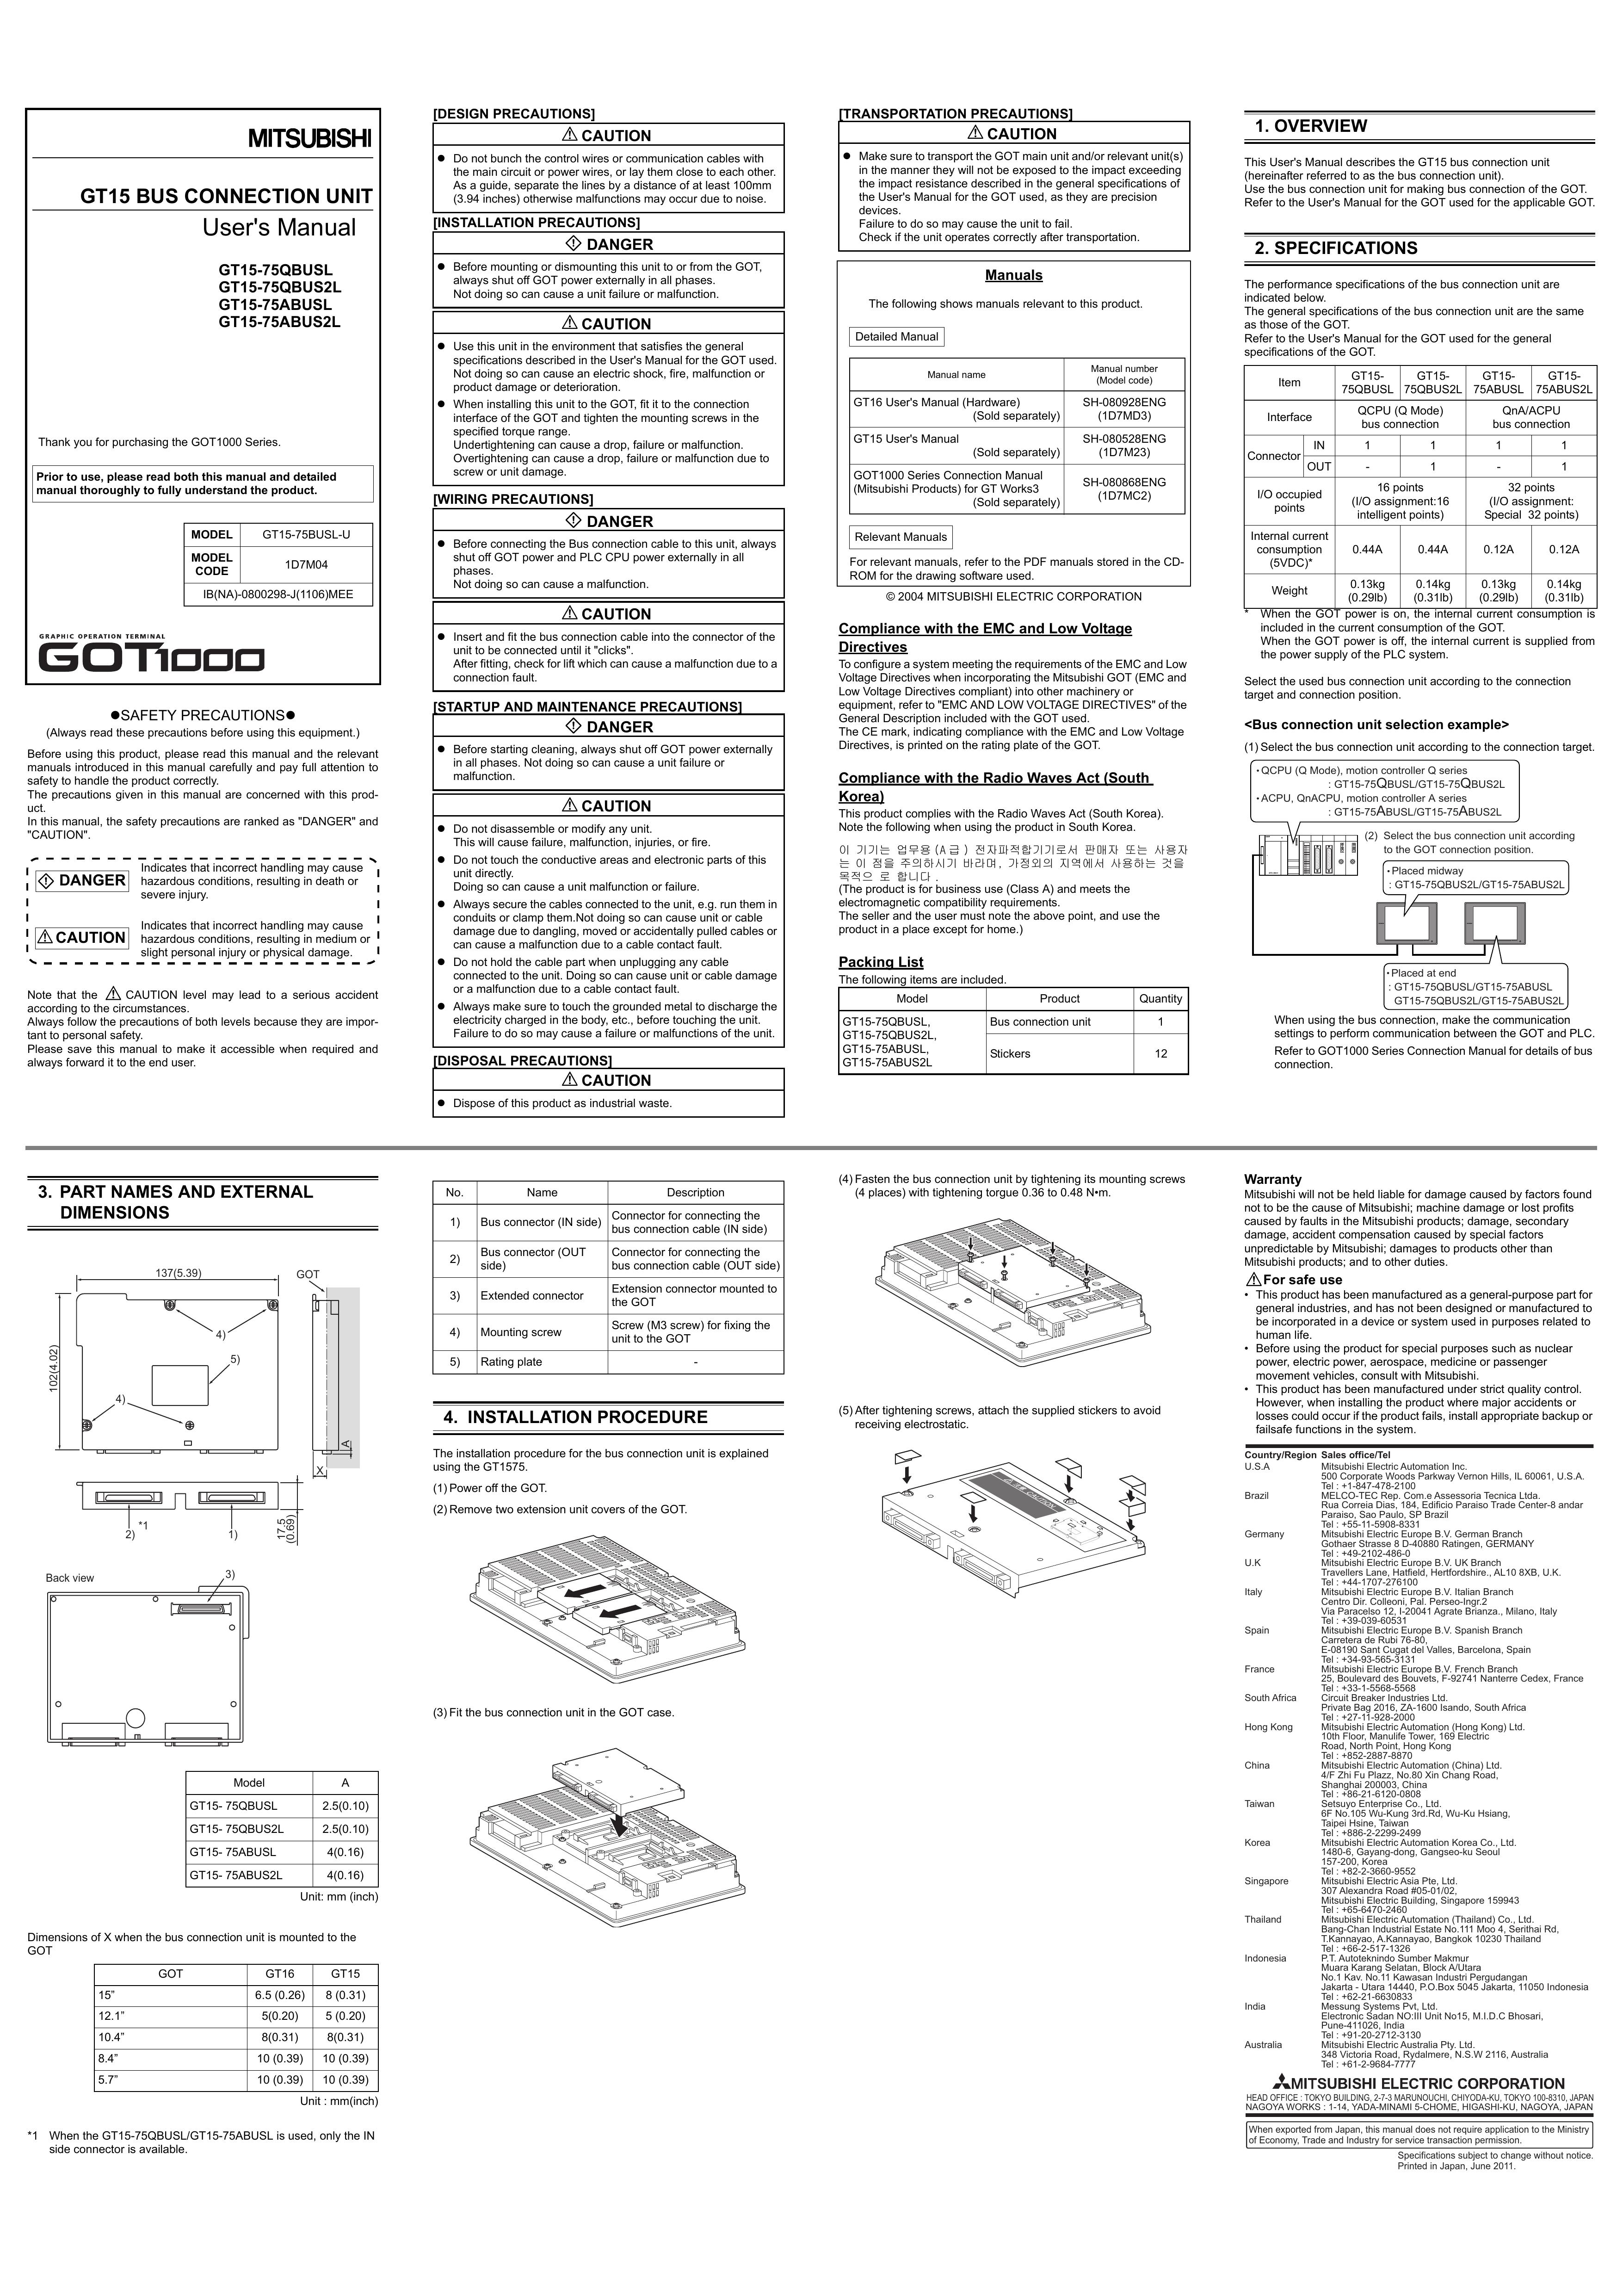 Mitsubishi Electronics GT15-75ABUSL Insect Control Equipment User Manual